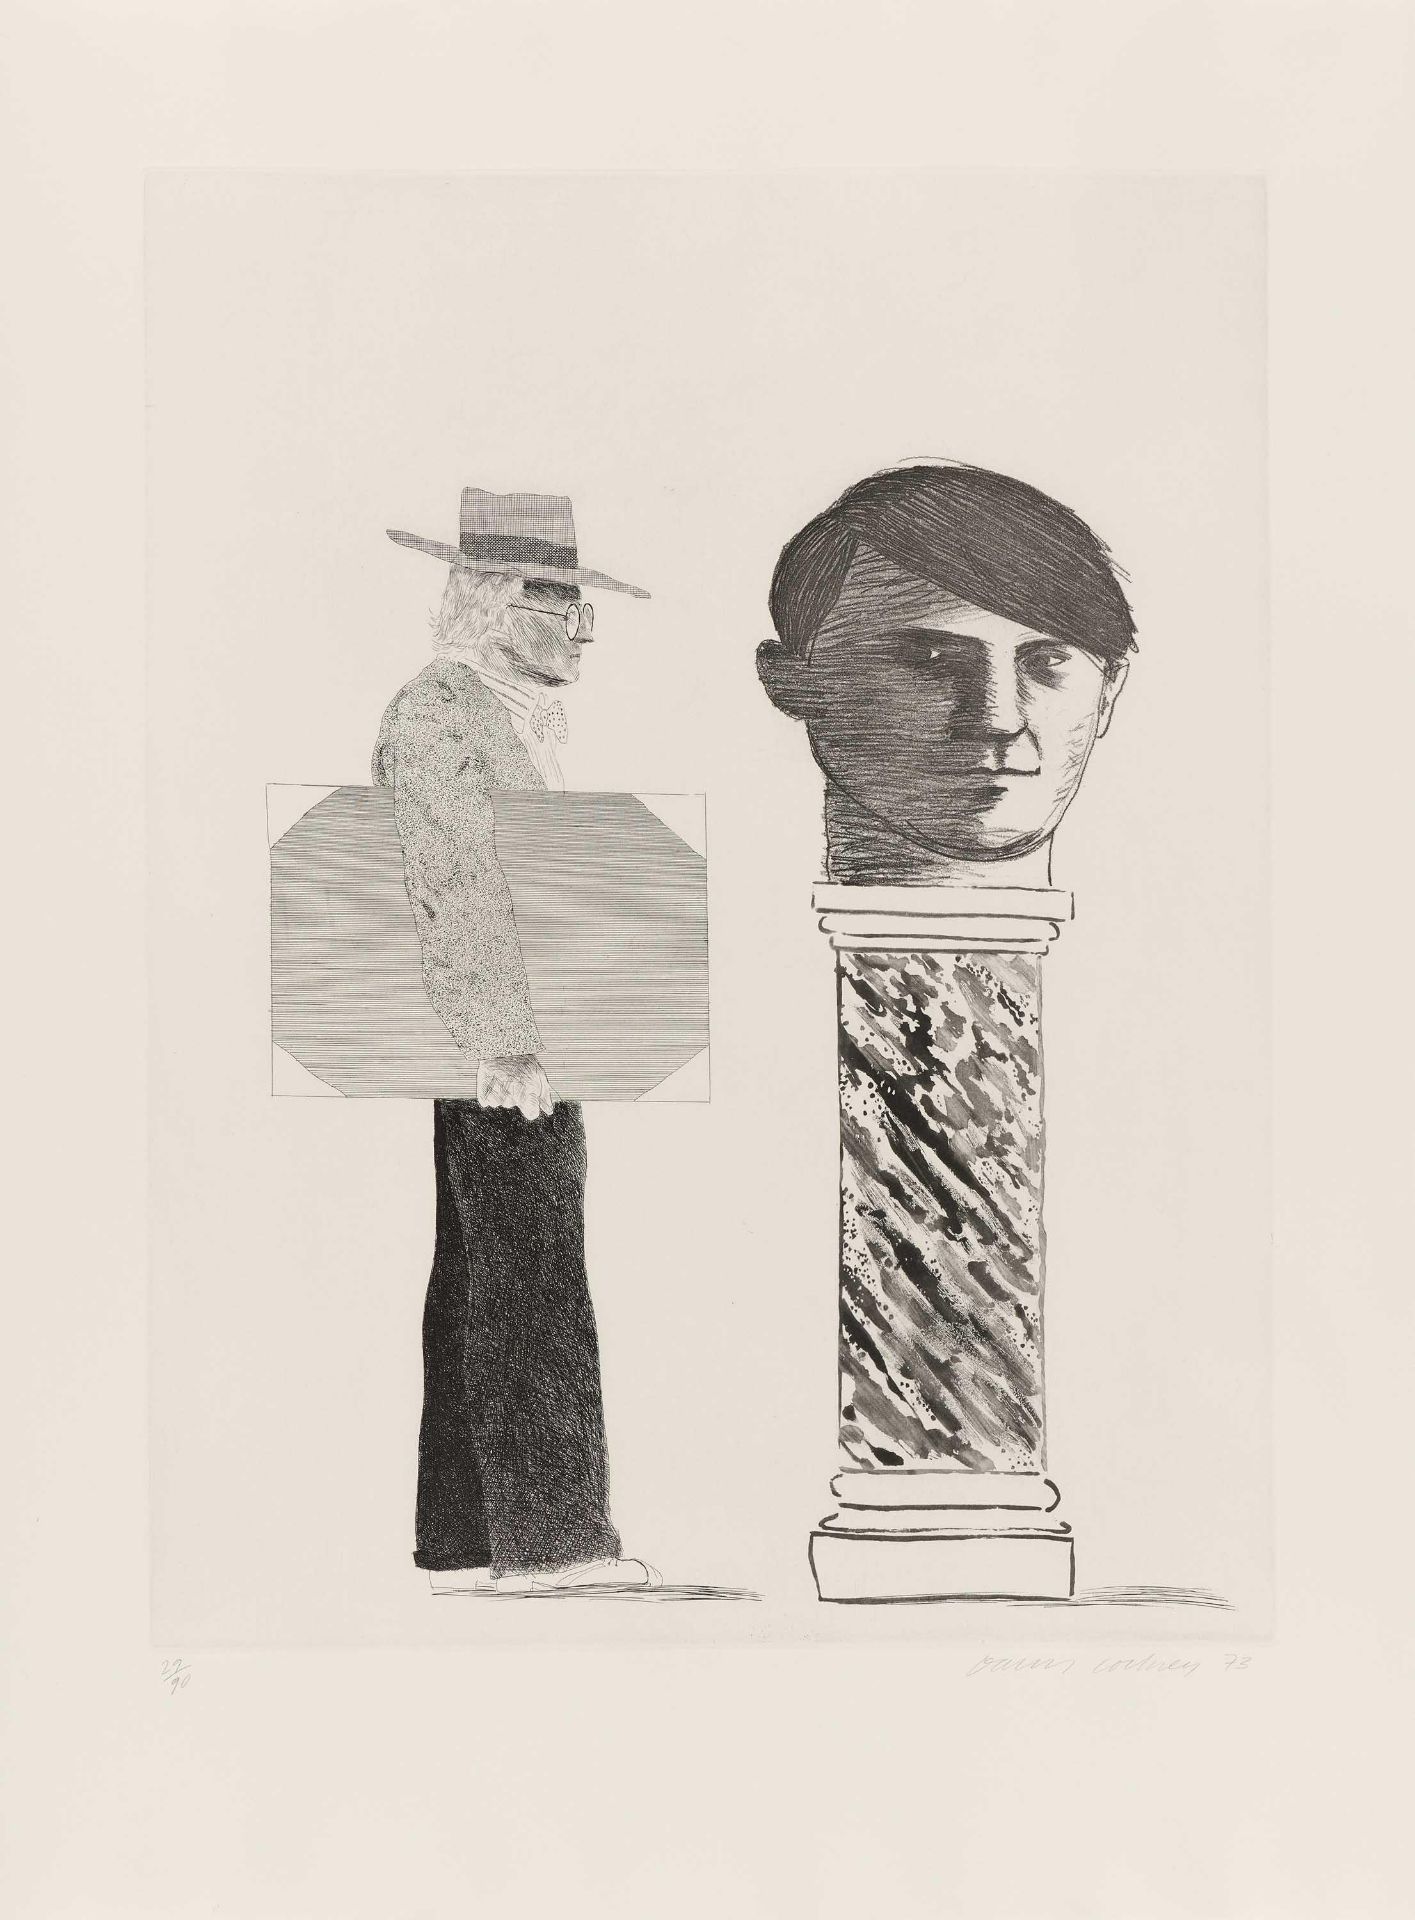 David Hockney: The Student